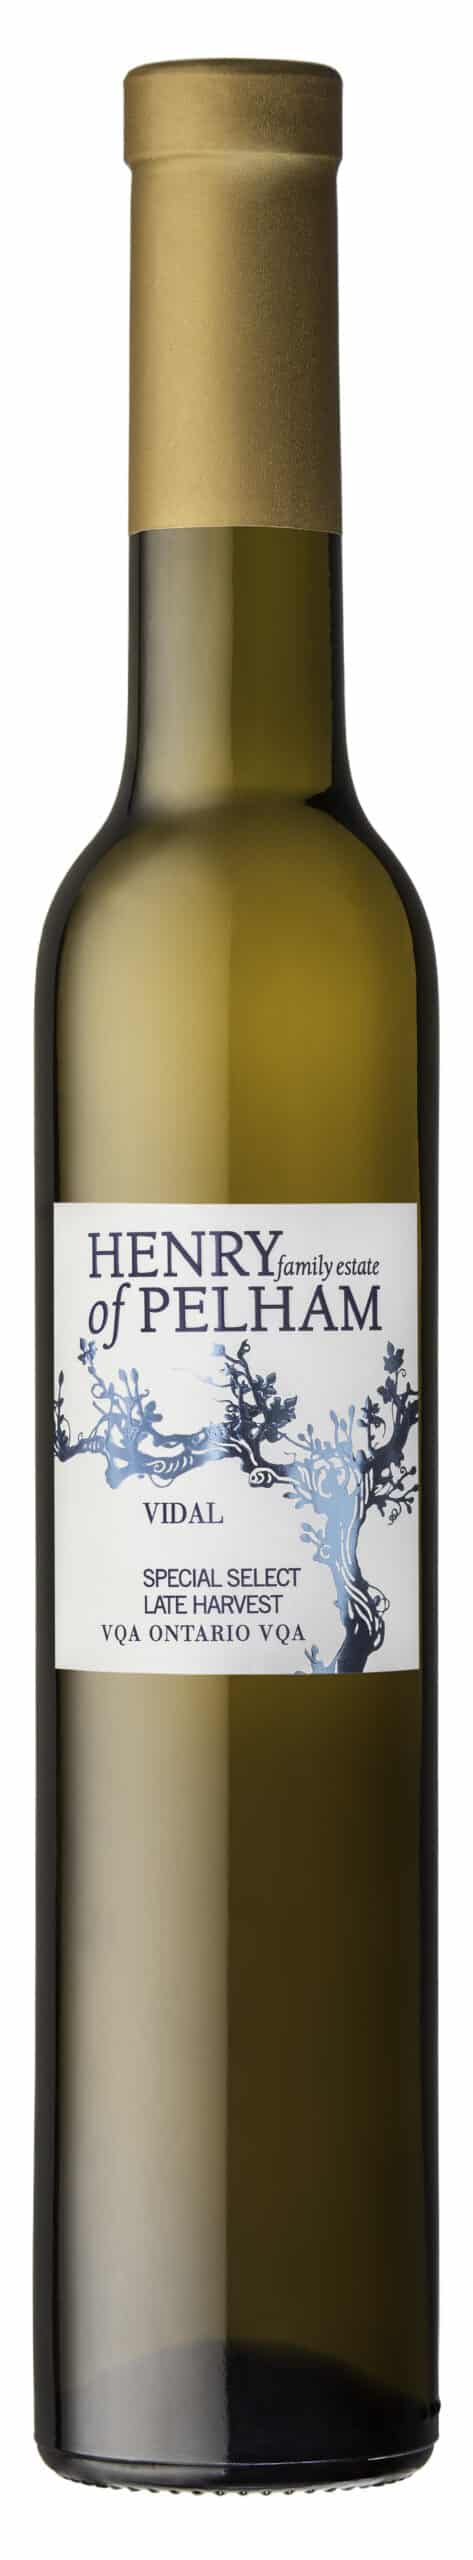 Henry of Pelham Special Select Late Harvest Vidal 